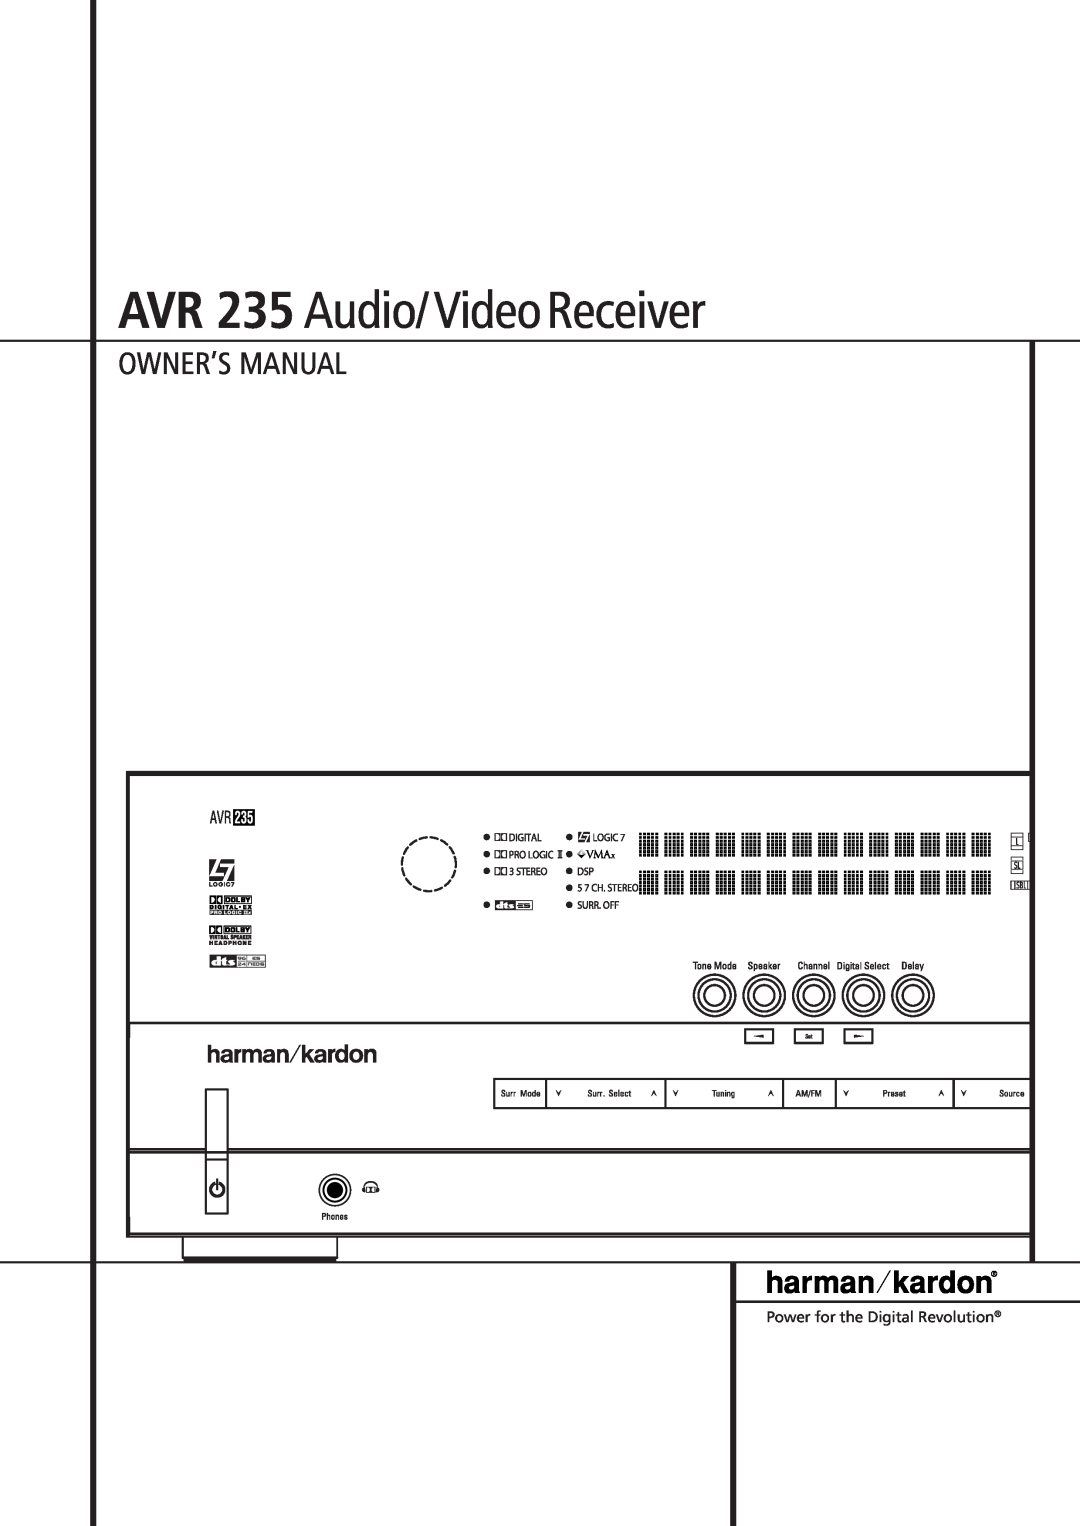 Harman-Kardon owner manual AVR 235 Audio/Video Receiver, Owner’S Manual 